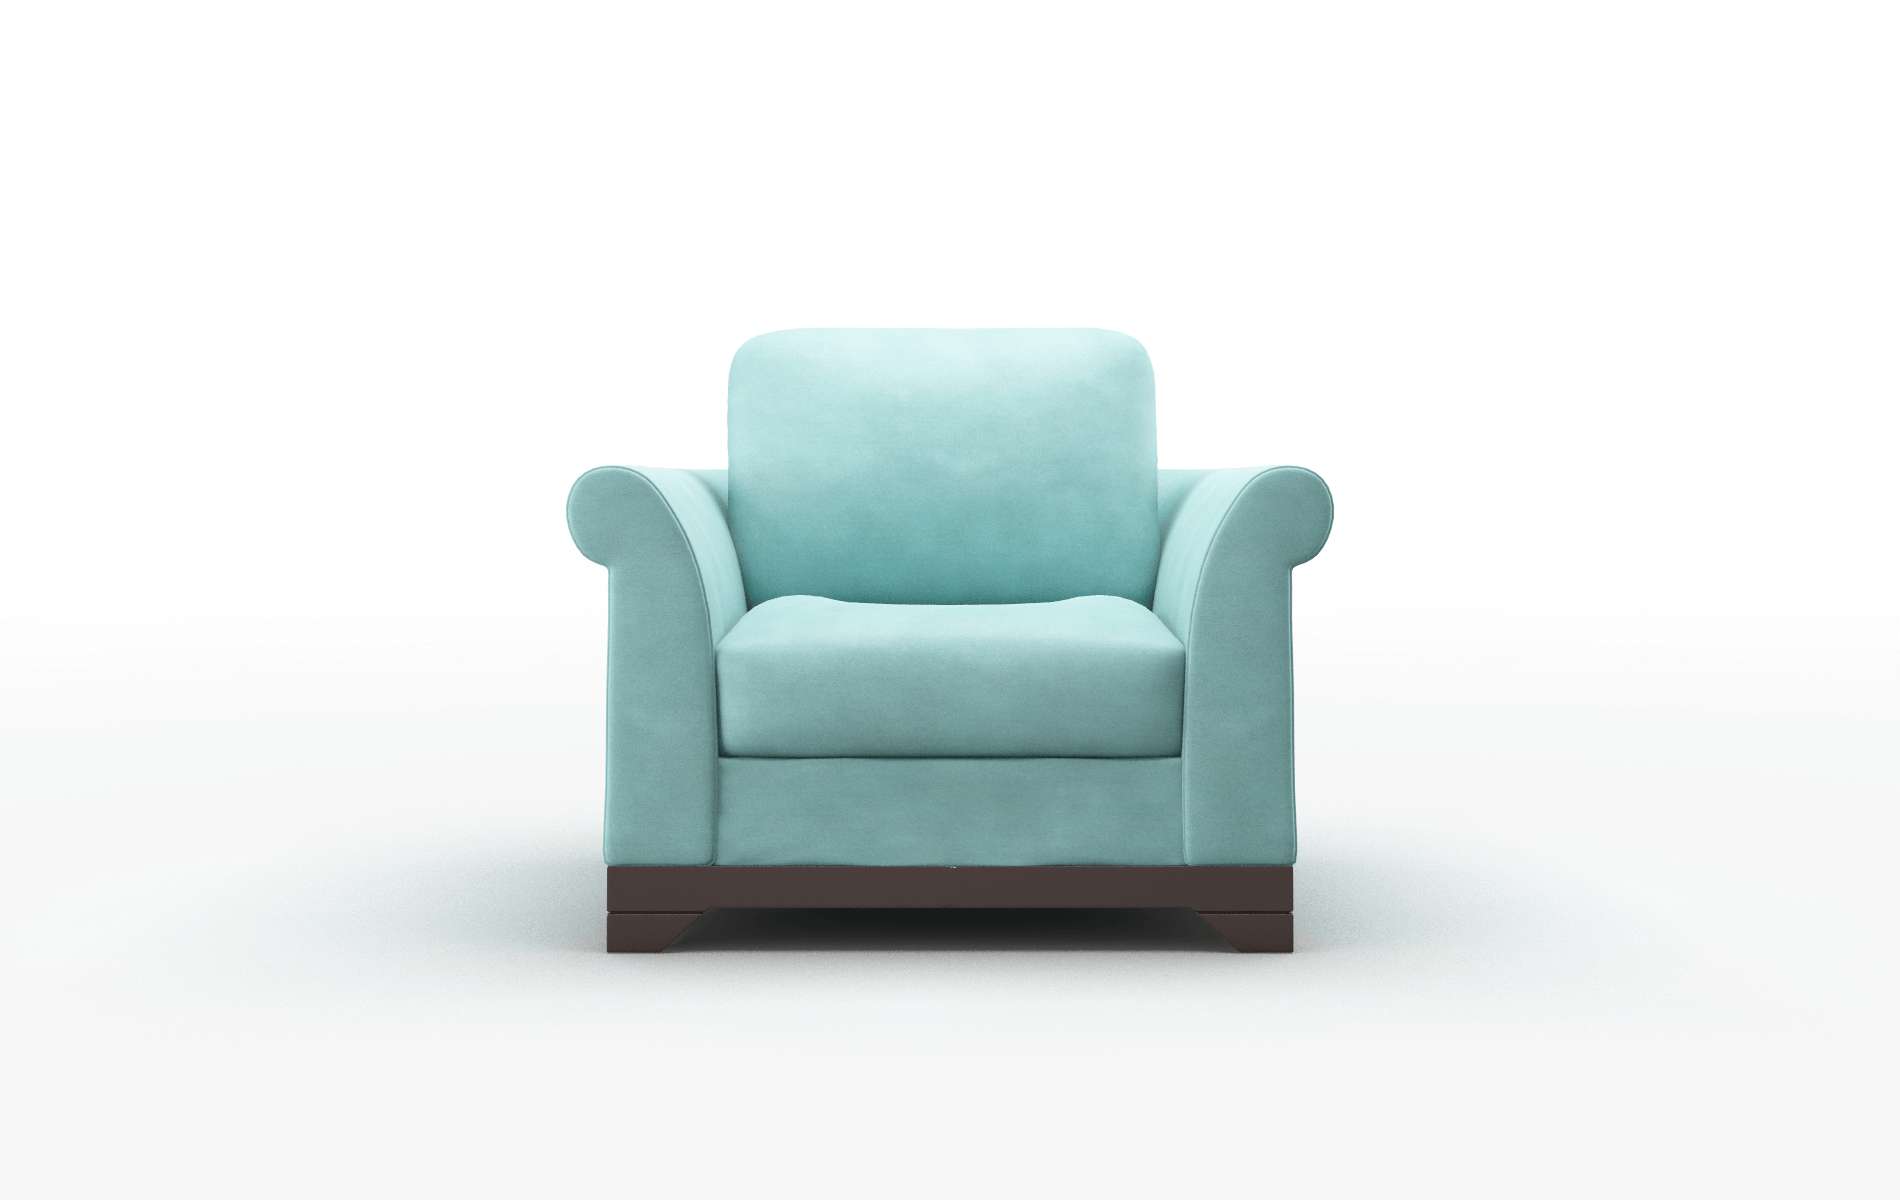 Denver Curious Turquoise chair espresso legs